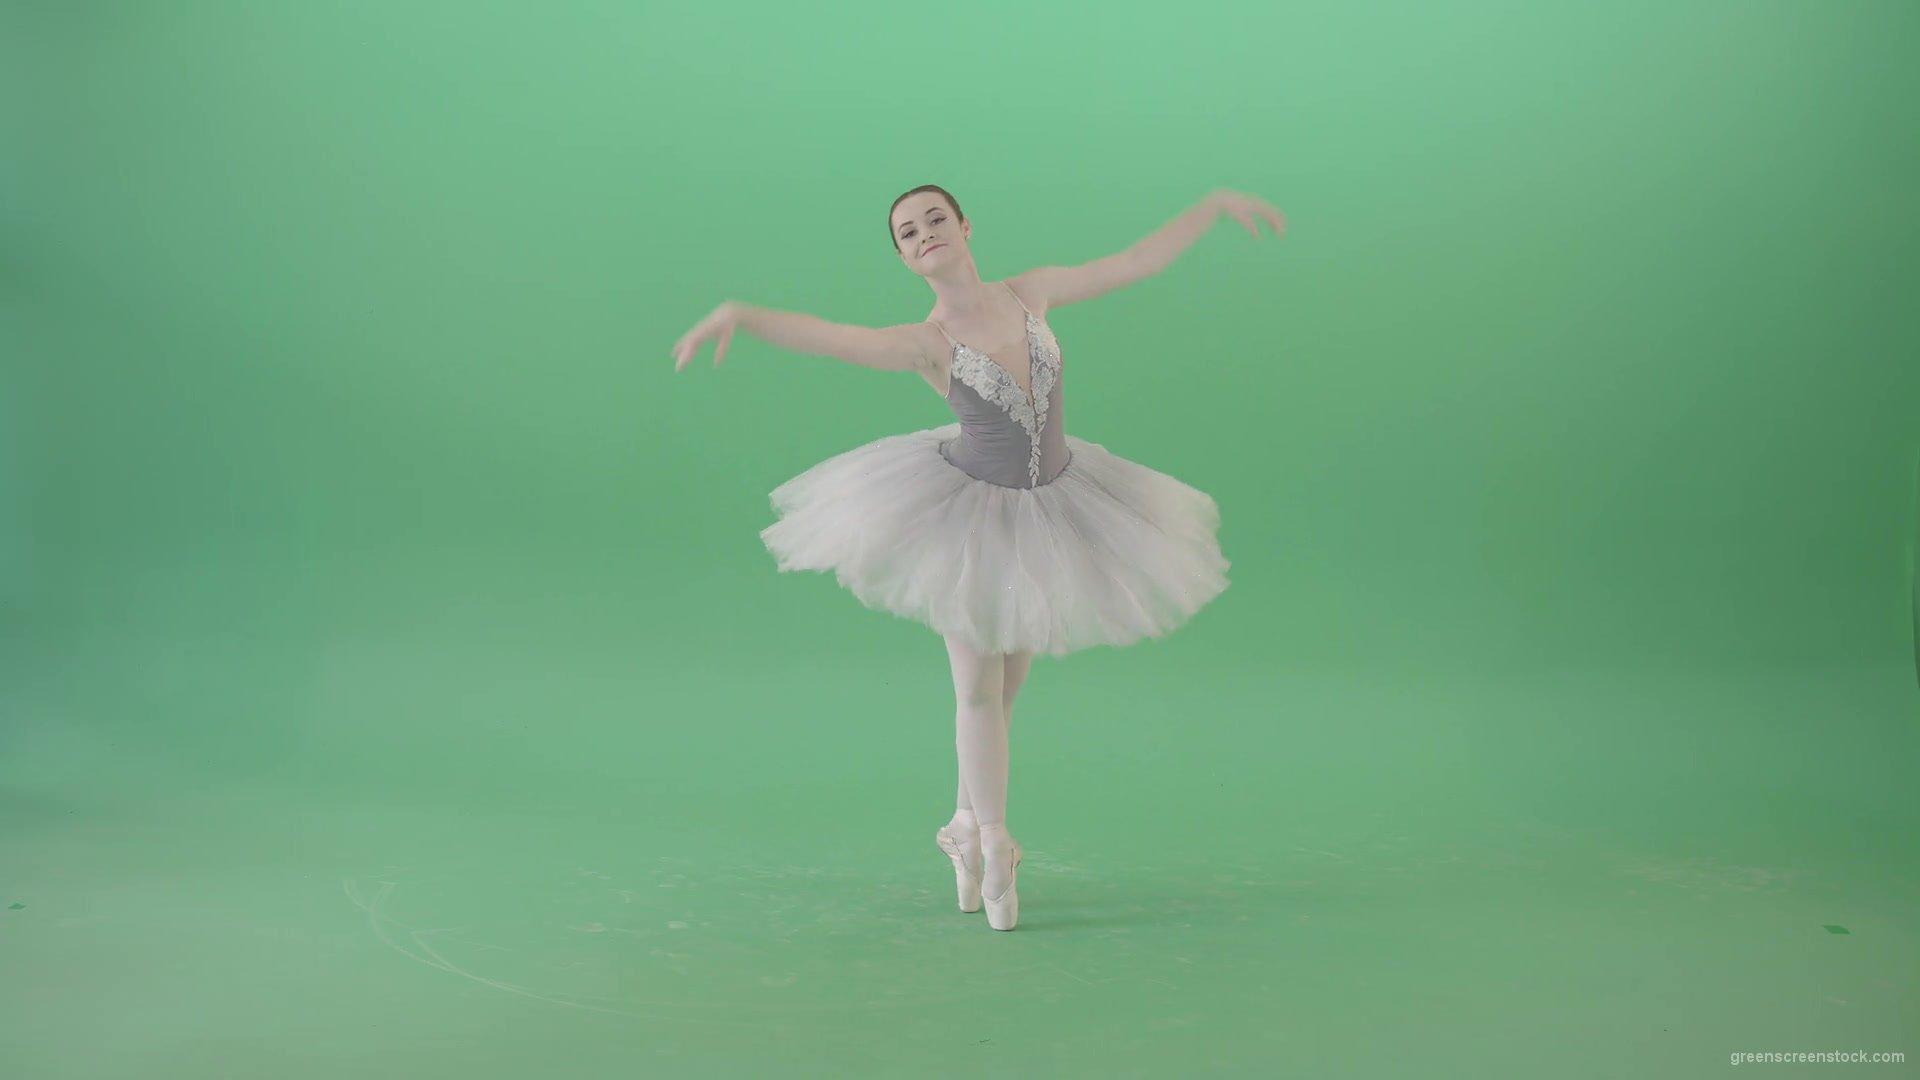 Ballerina-Woman-dancing-elegnatly-ballet-swan-lake-dance-in-green-screen-studio-4K-Video-Footage-1920_007 Green Screen Stock